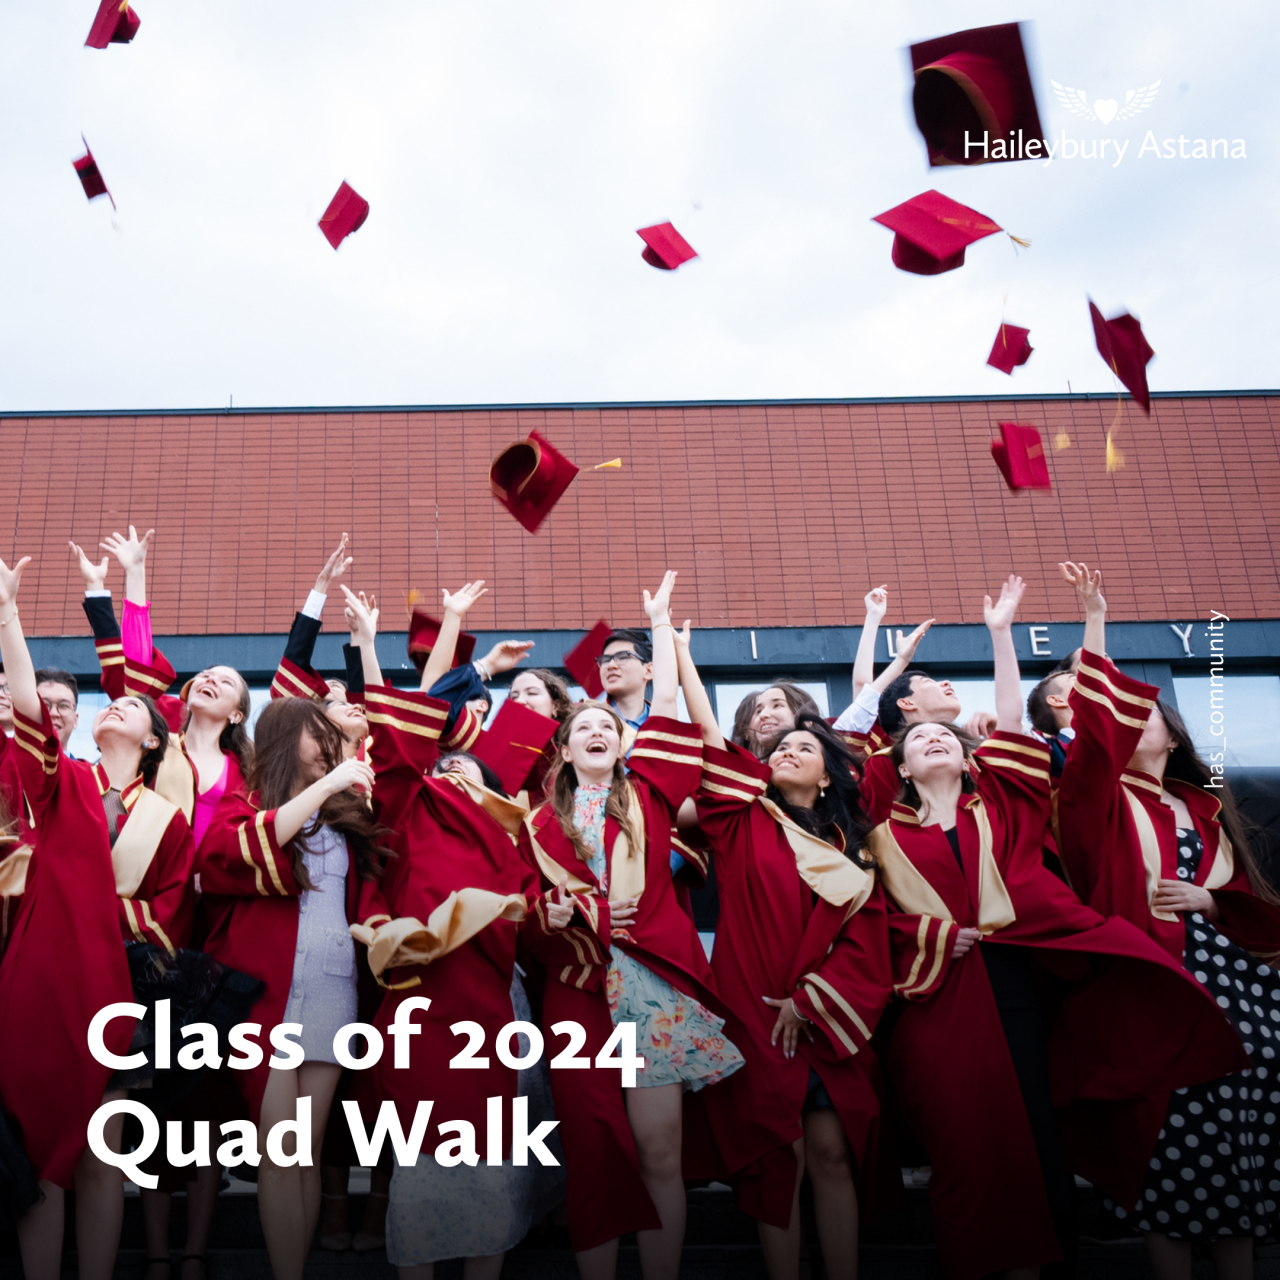 Haileybury Astana Celebrates the Class of 2024 with the Quad Walk